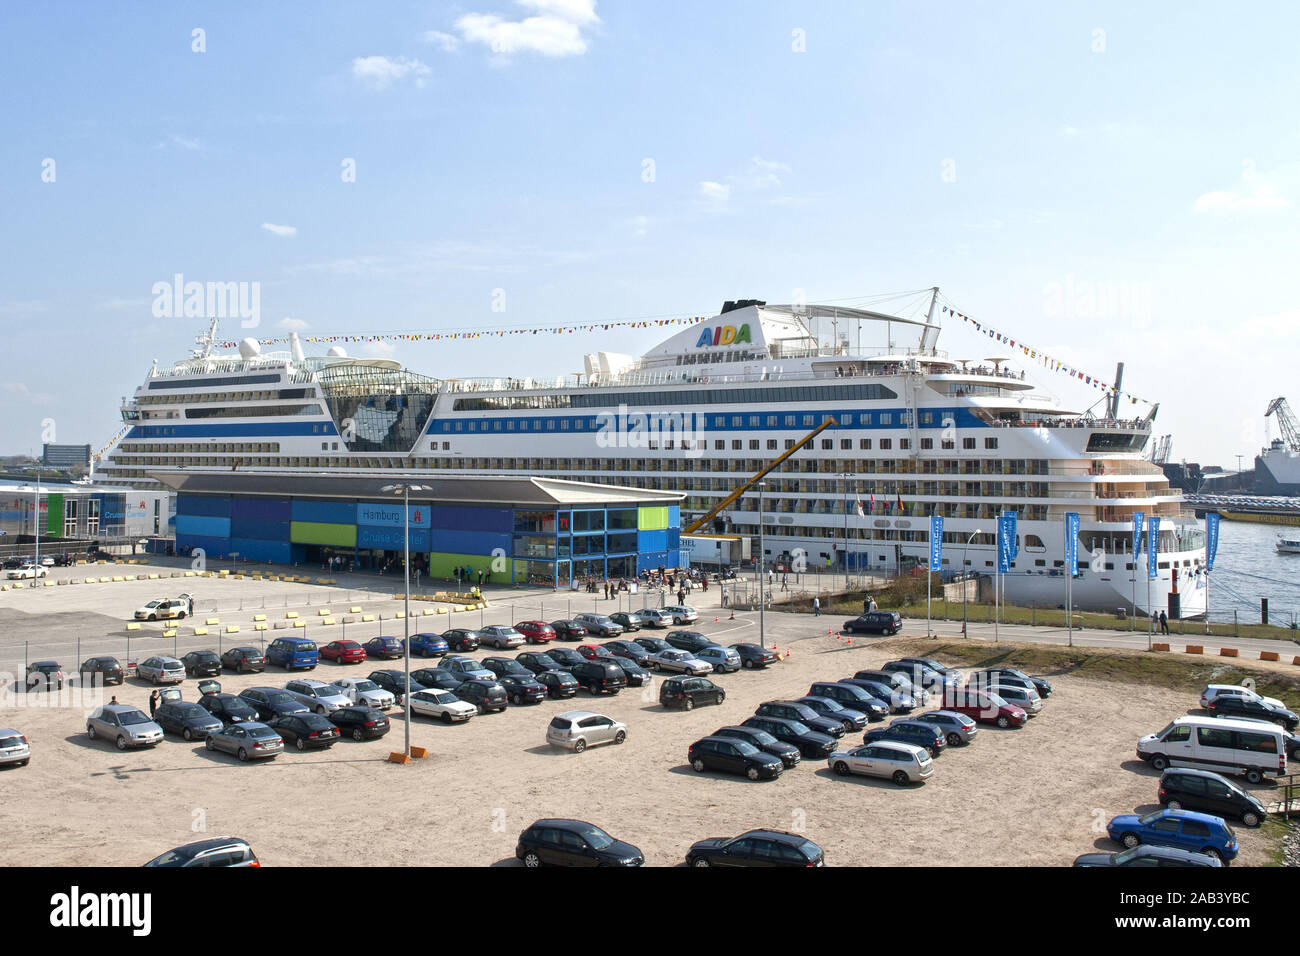 Das Kreuzfahrtschiff AIDAblu am Terminal im Hamburger Hafen |The AIDAblu cruise ship at the terminal in the Port of Hamburg| Stock Photo